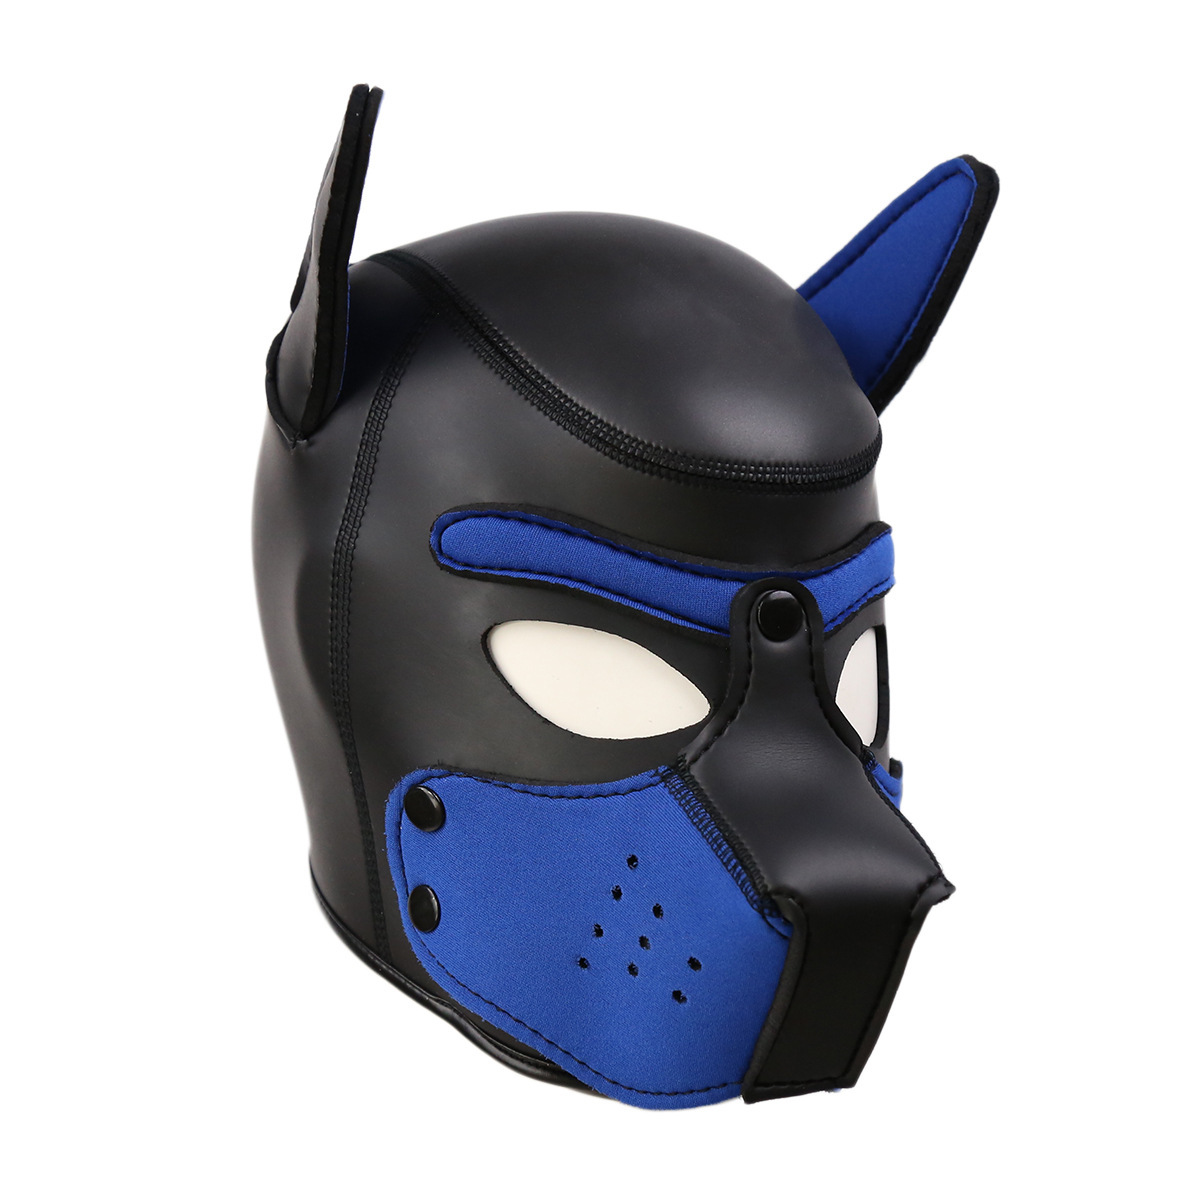 AL581645125550-XL size sex toys adult toys colorful SM dog headgear performance props toy dog ​​head mask